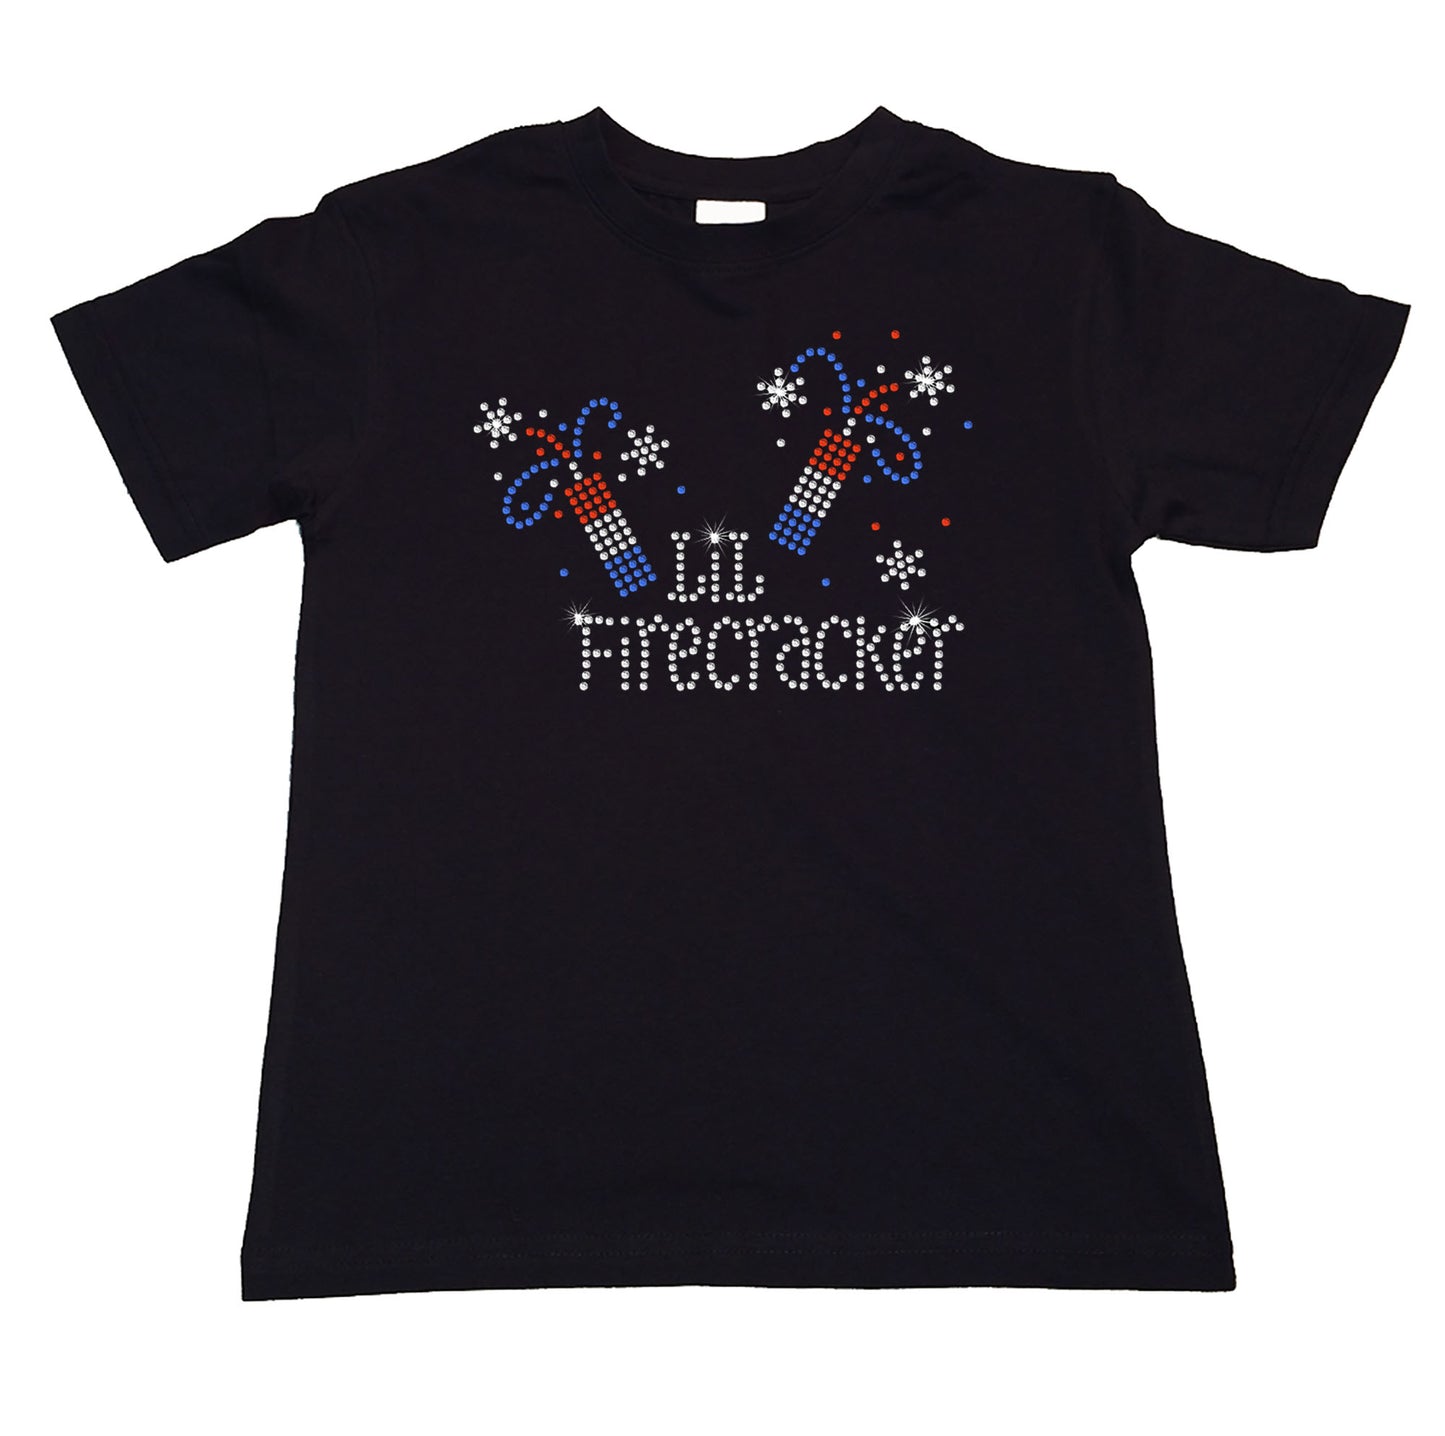 Girls Rhinestone T-Shirt " Lil Firecracker Girls Crew " Kids Size 3 to 14 Available